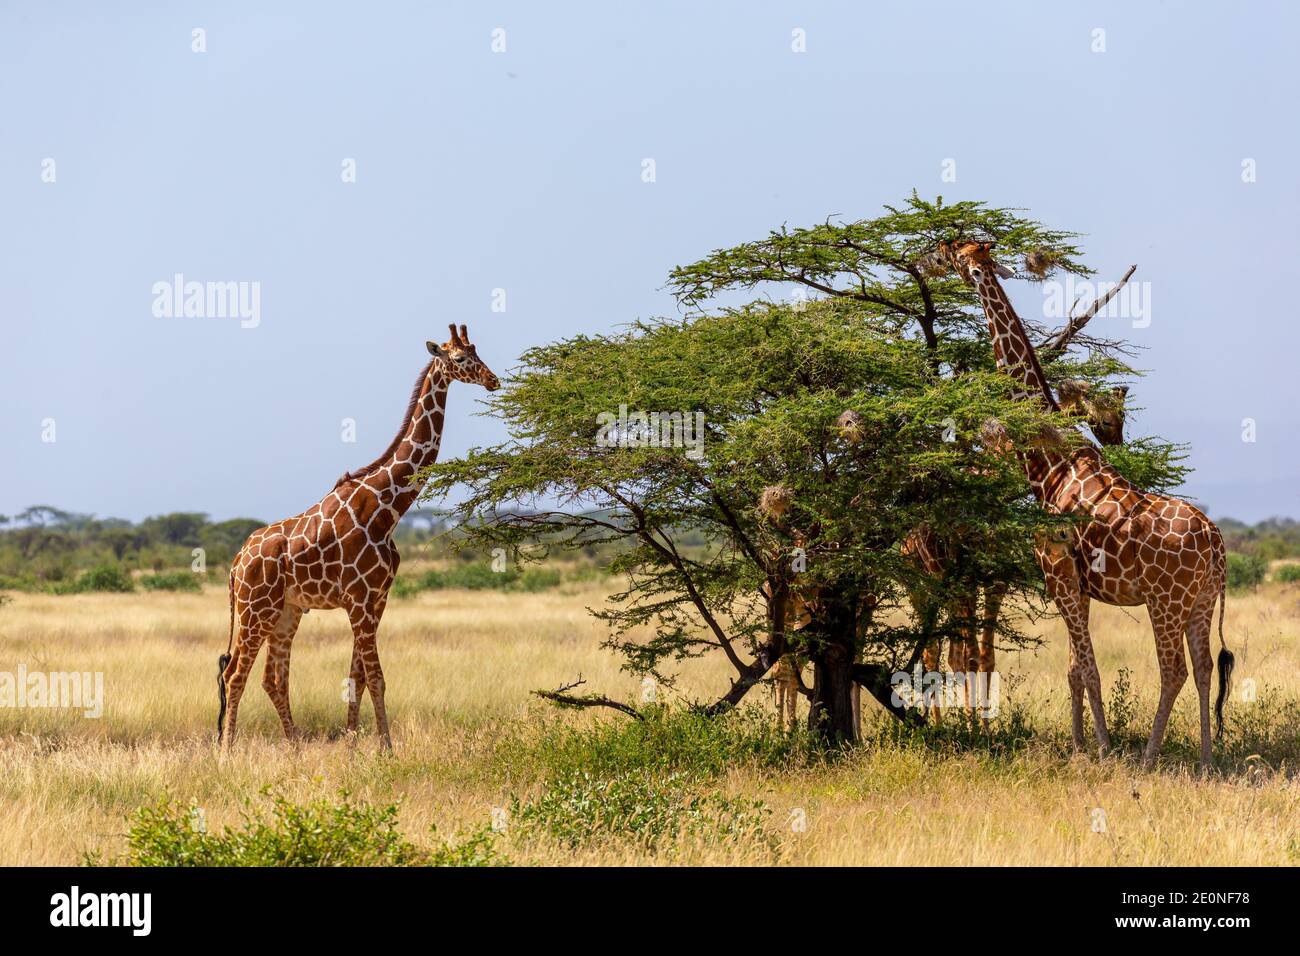 The Somalia giraffes eat the leaves of acacia trees. Stock Photo